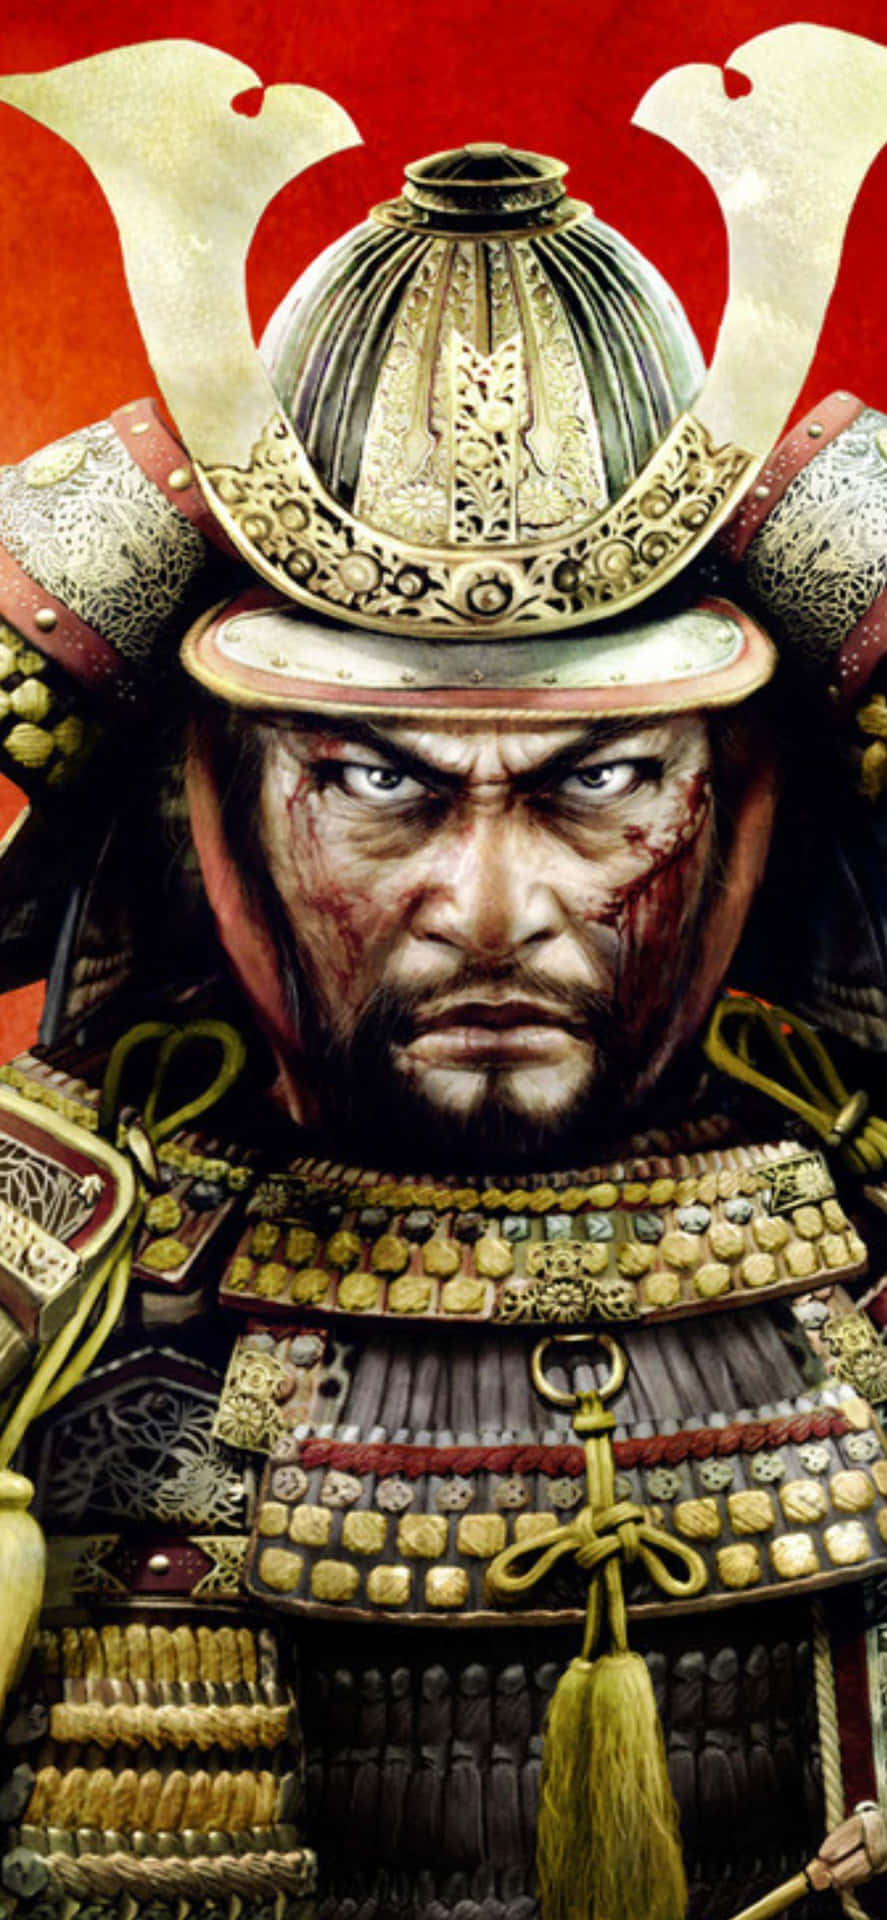 Iphonex Total War Shogun 2 Bakgrund